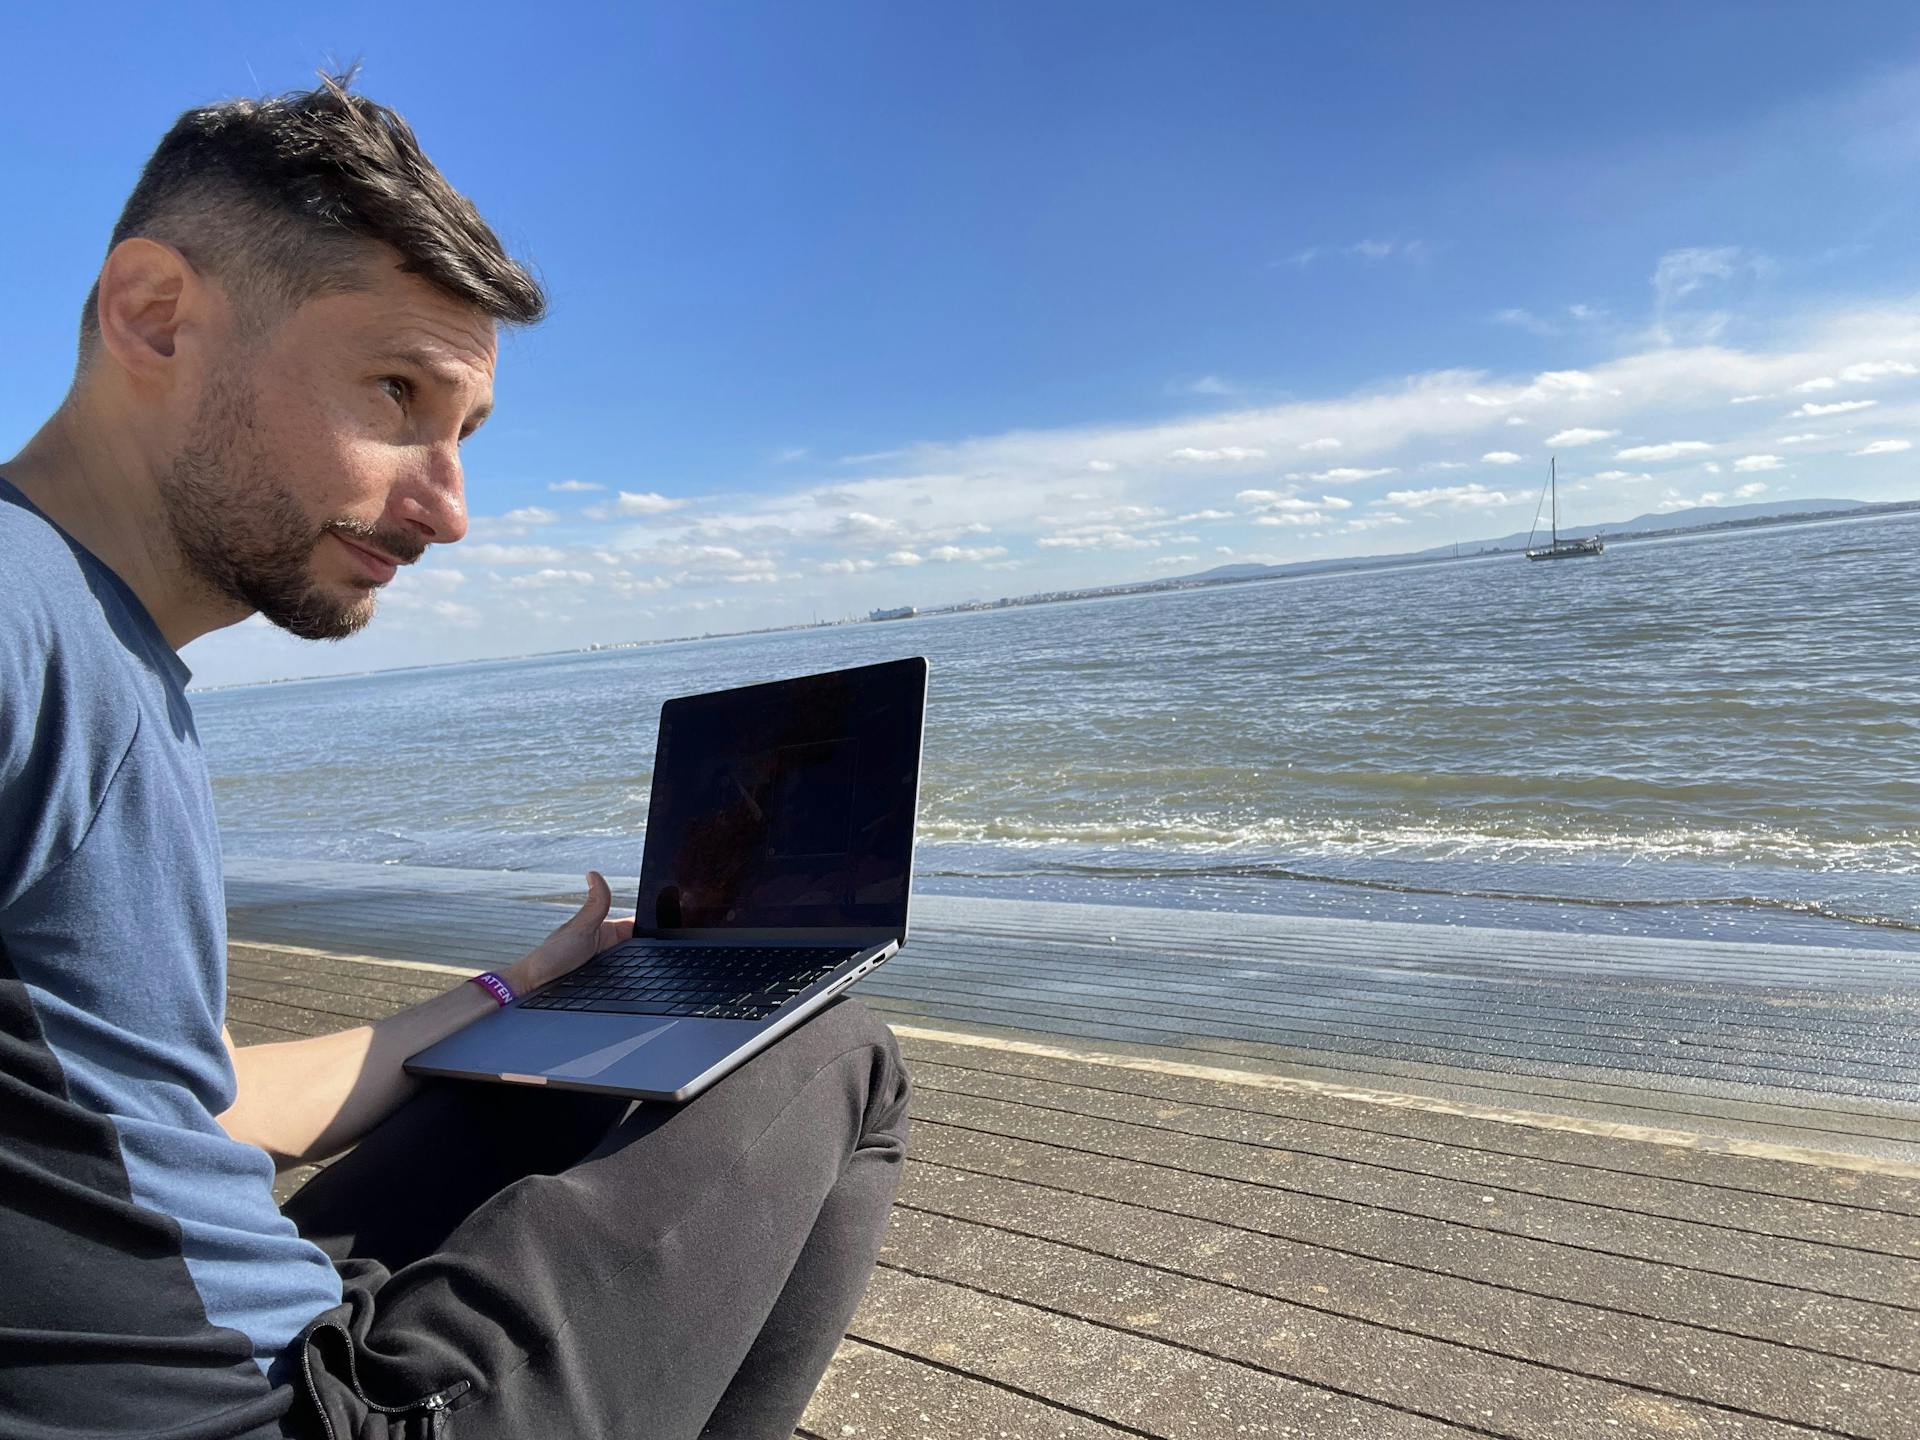 remote work near the ocean